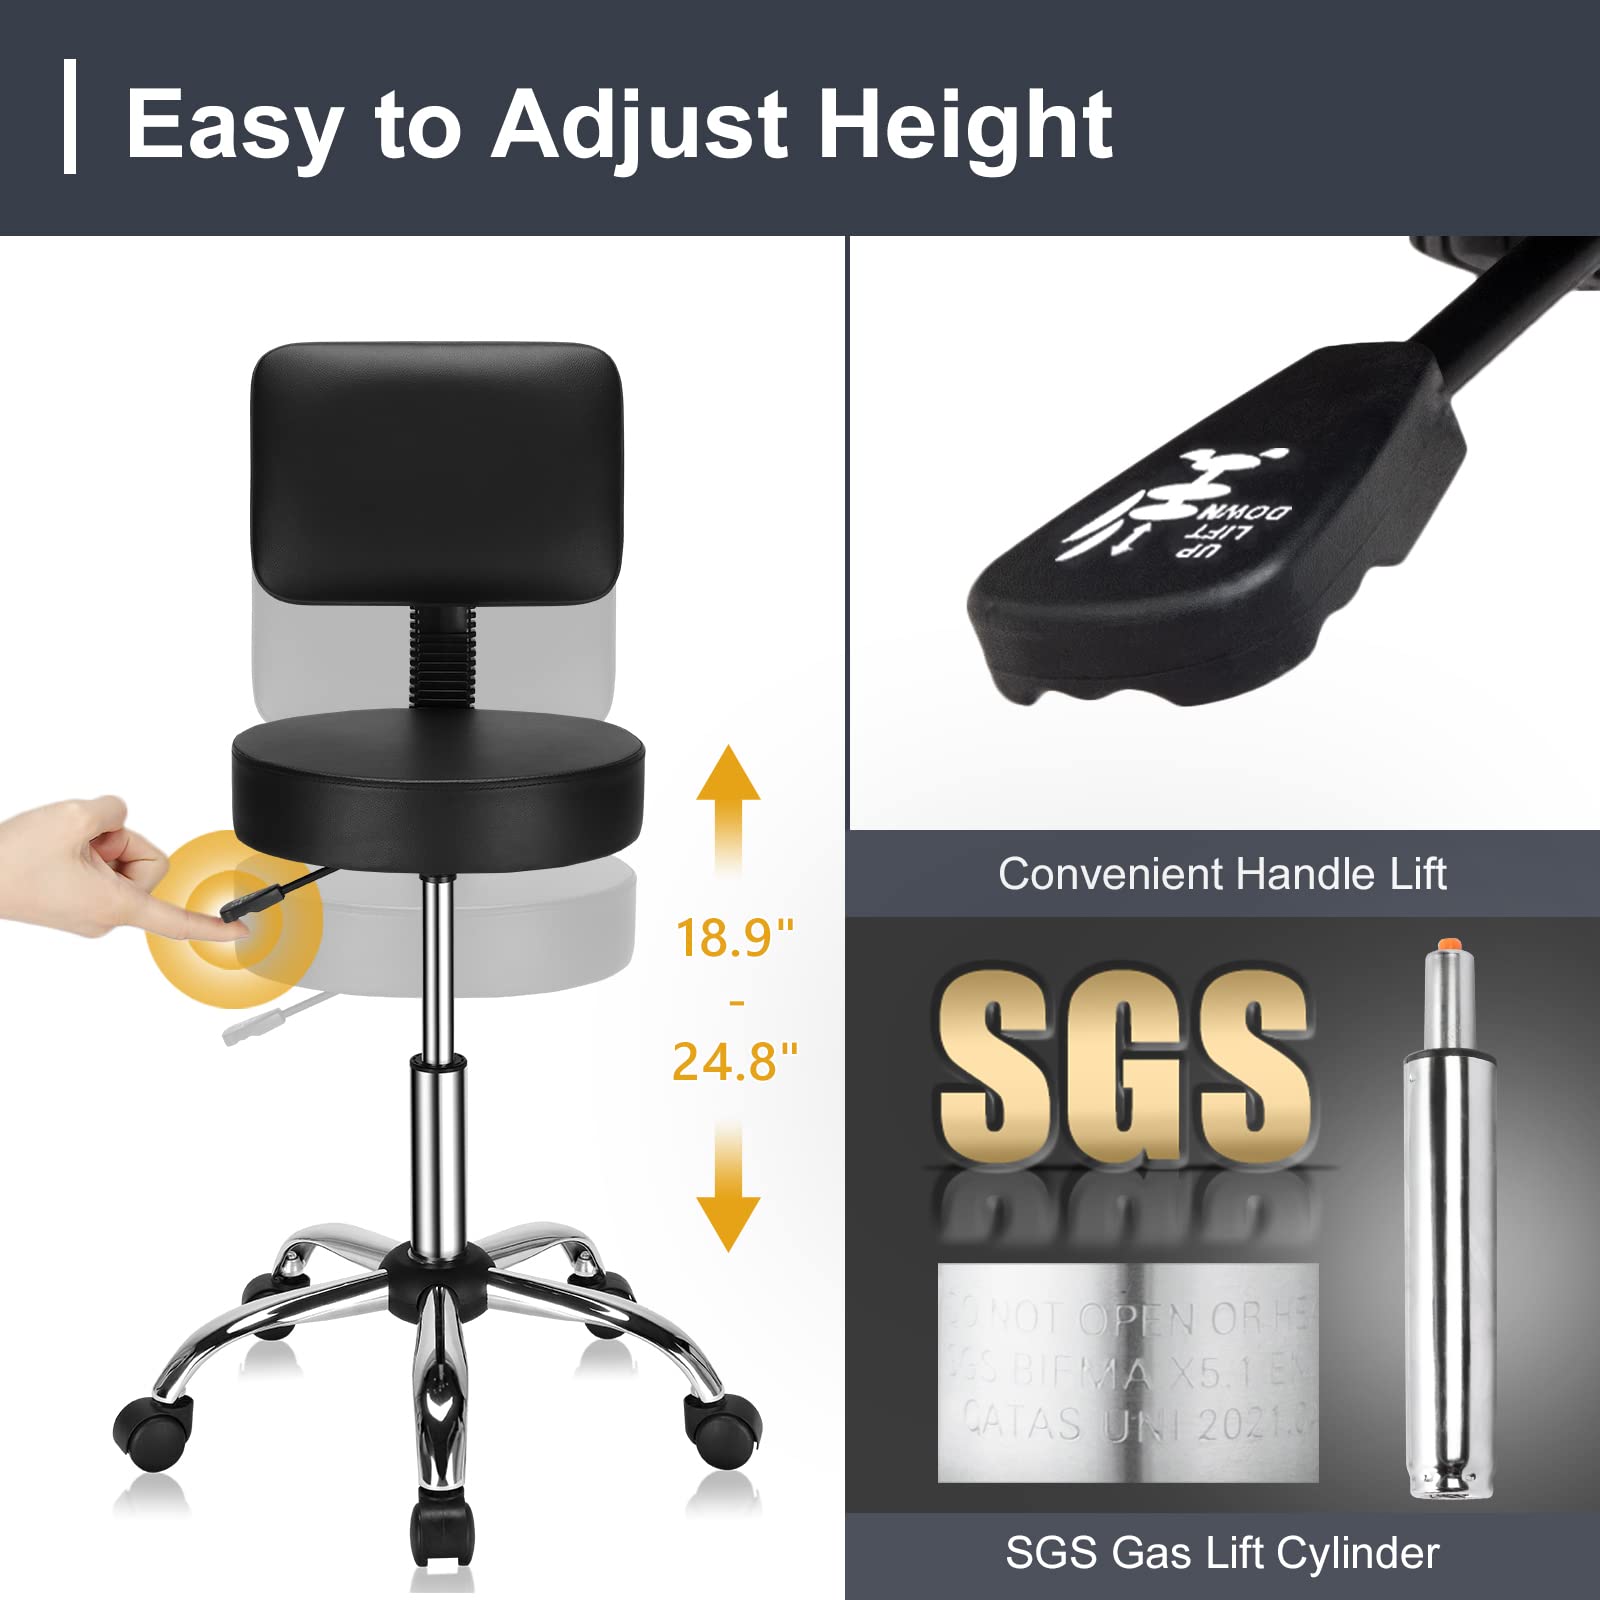 OmySalon Hydraulic Gas Lift Rolling Adjustable Salon Chair Stool with Backrest Black/White